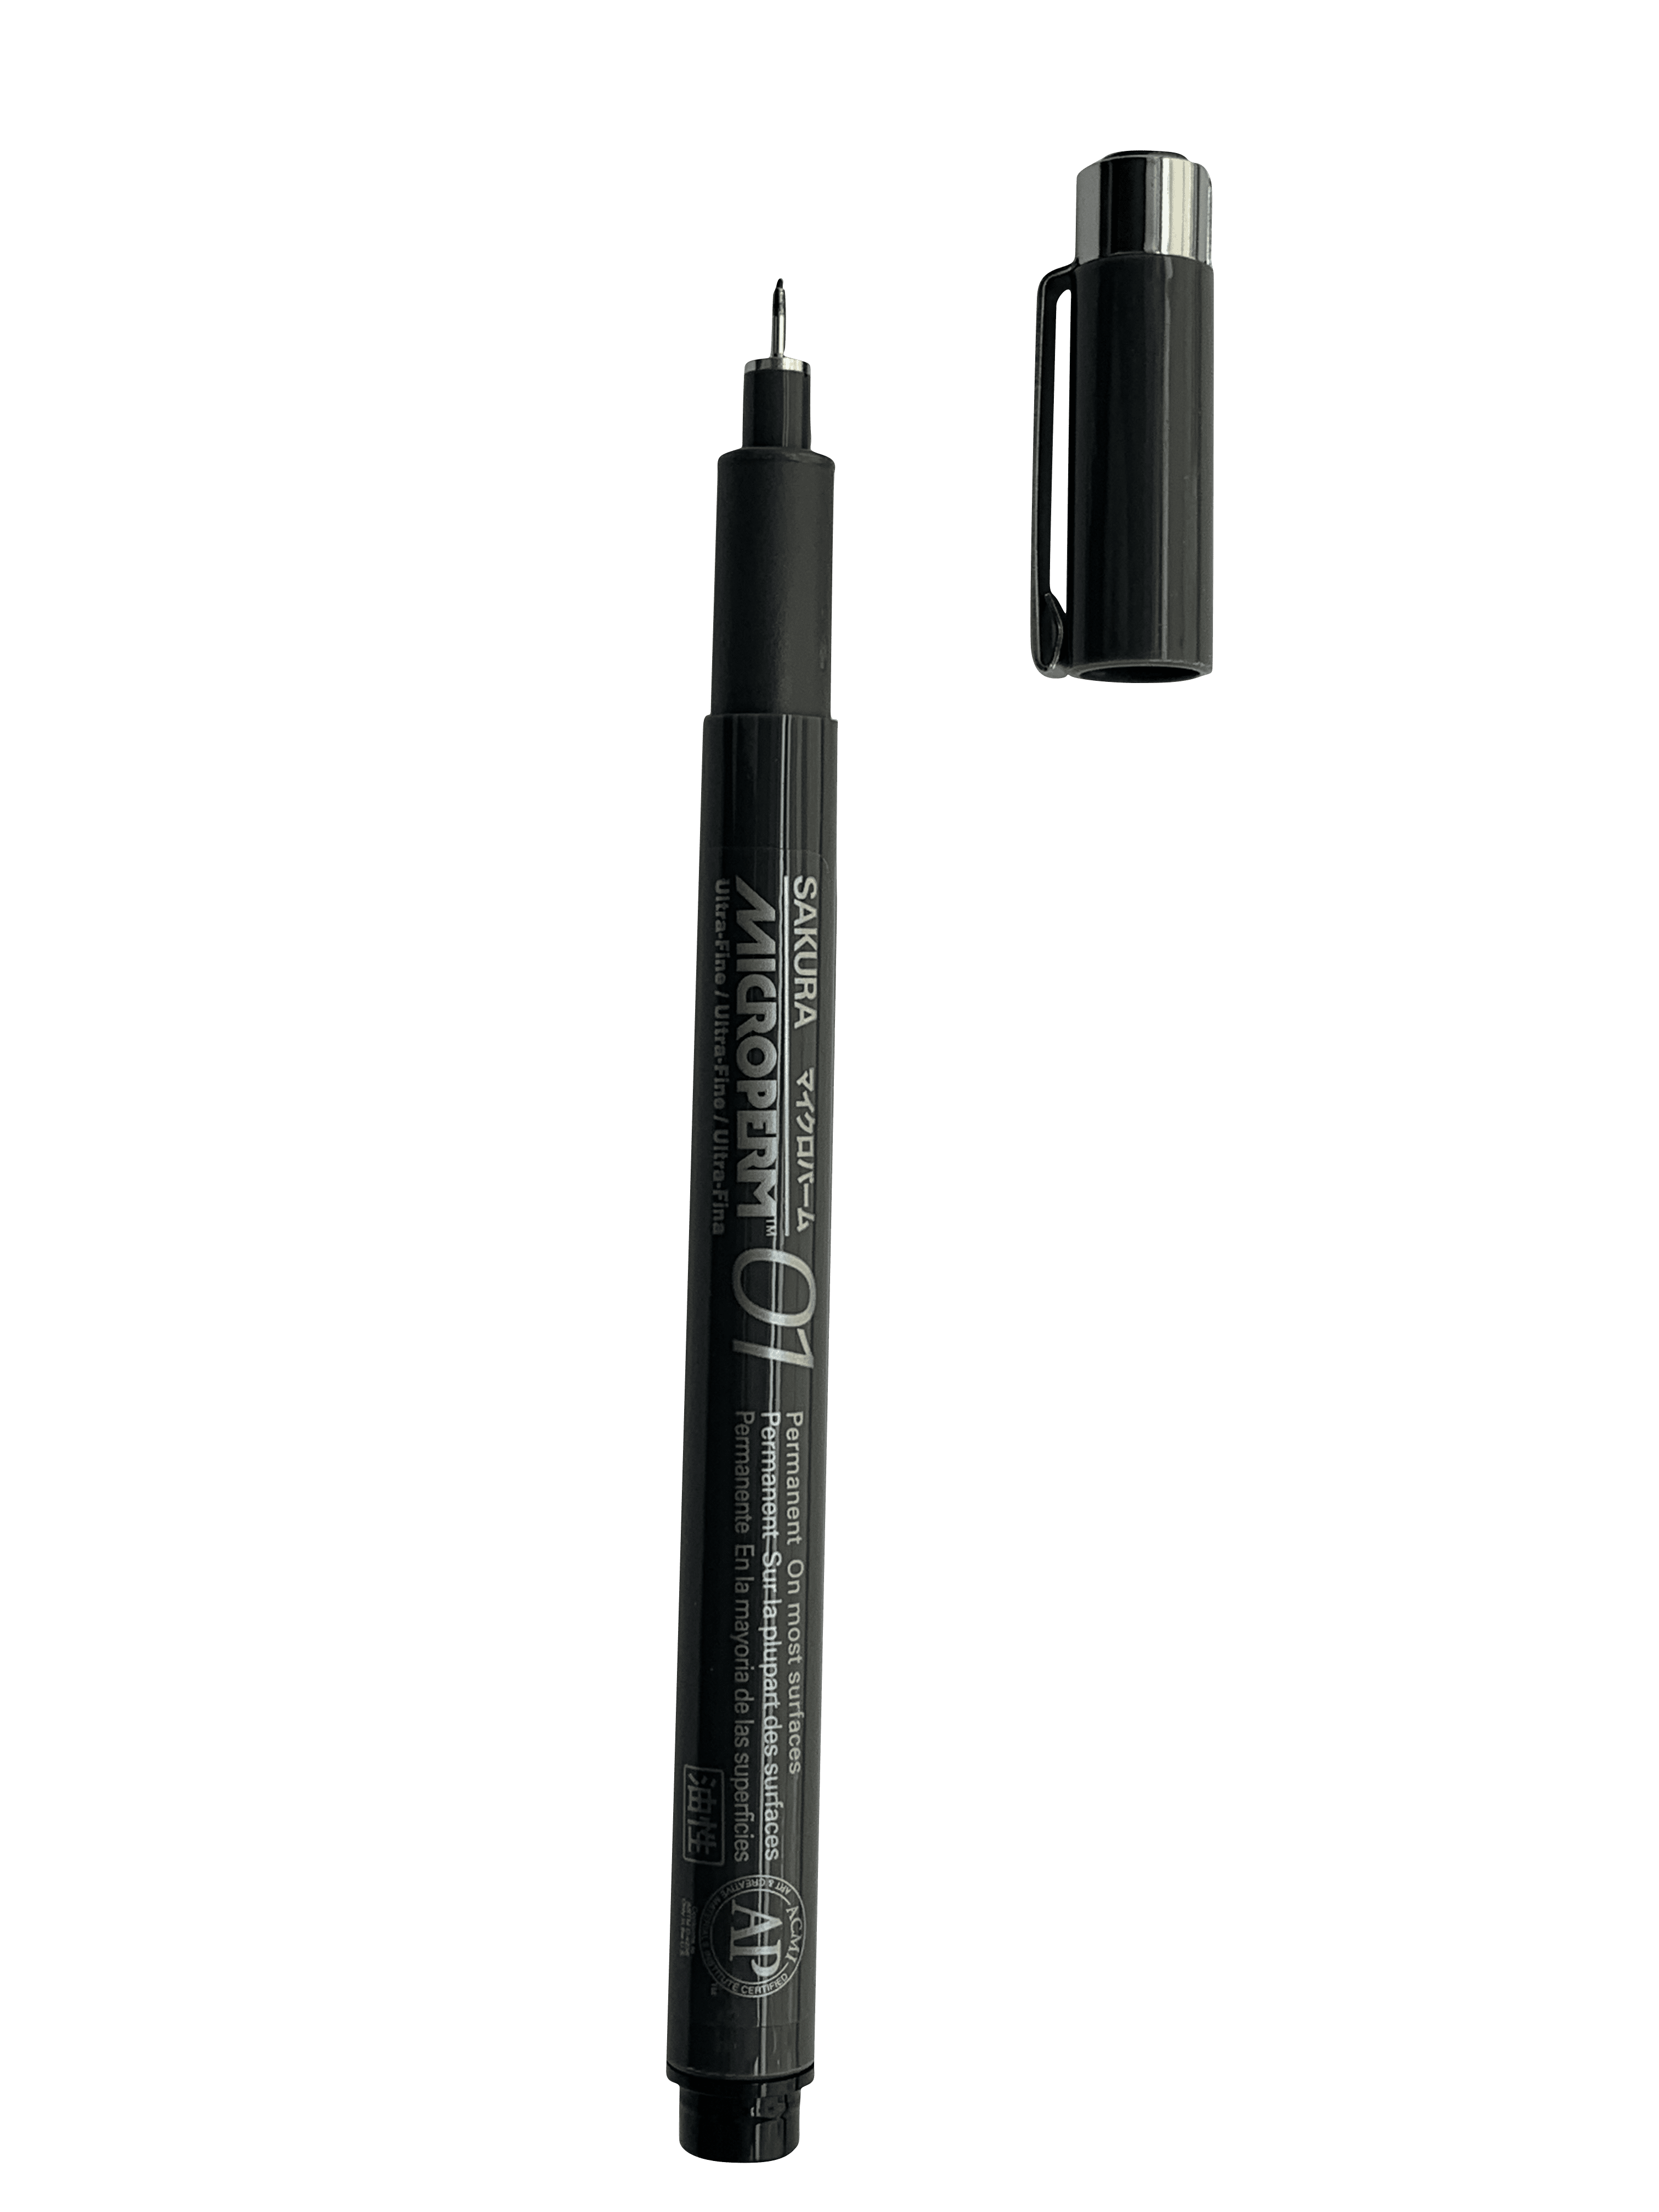 SAKURA Microperm Ultra Fine Point Pens  